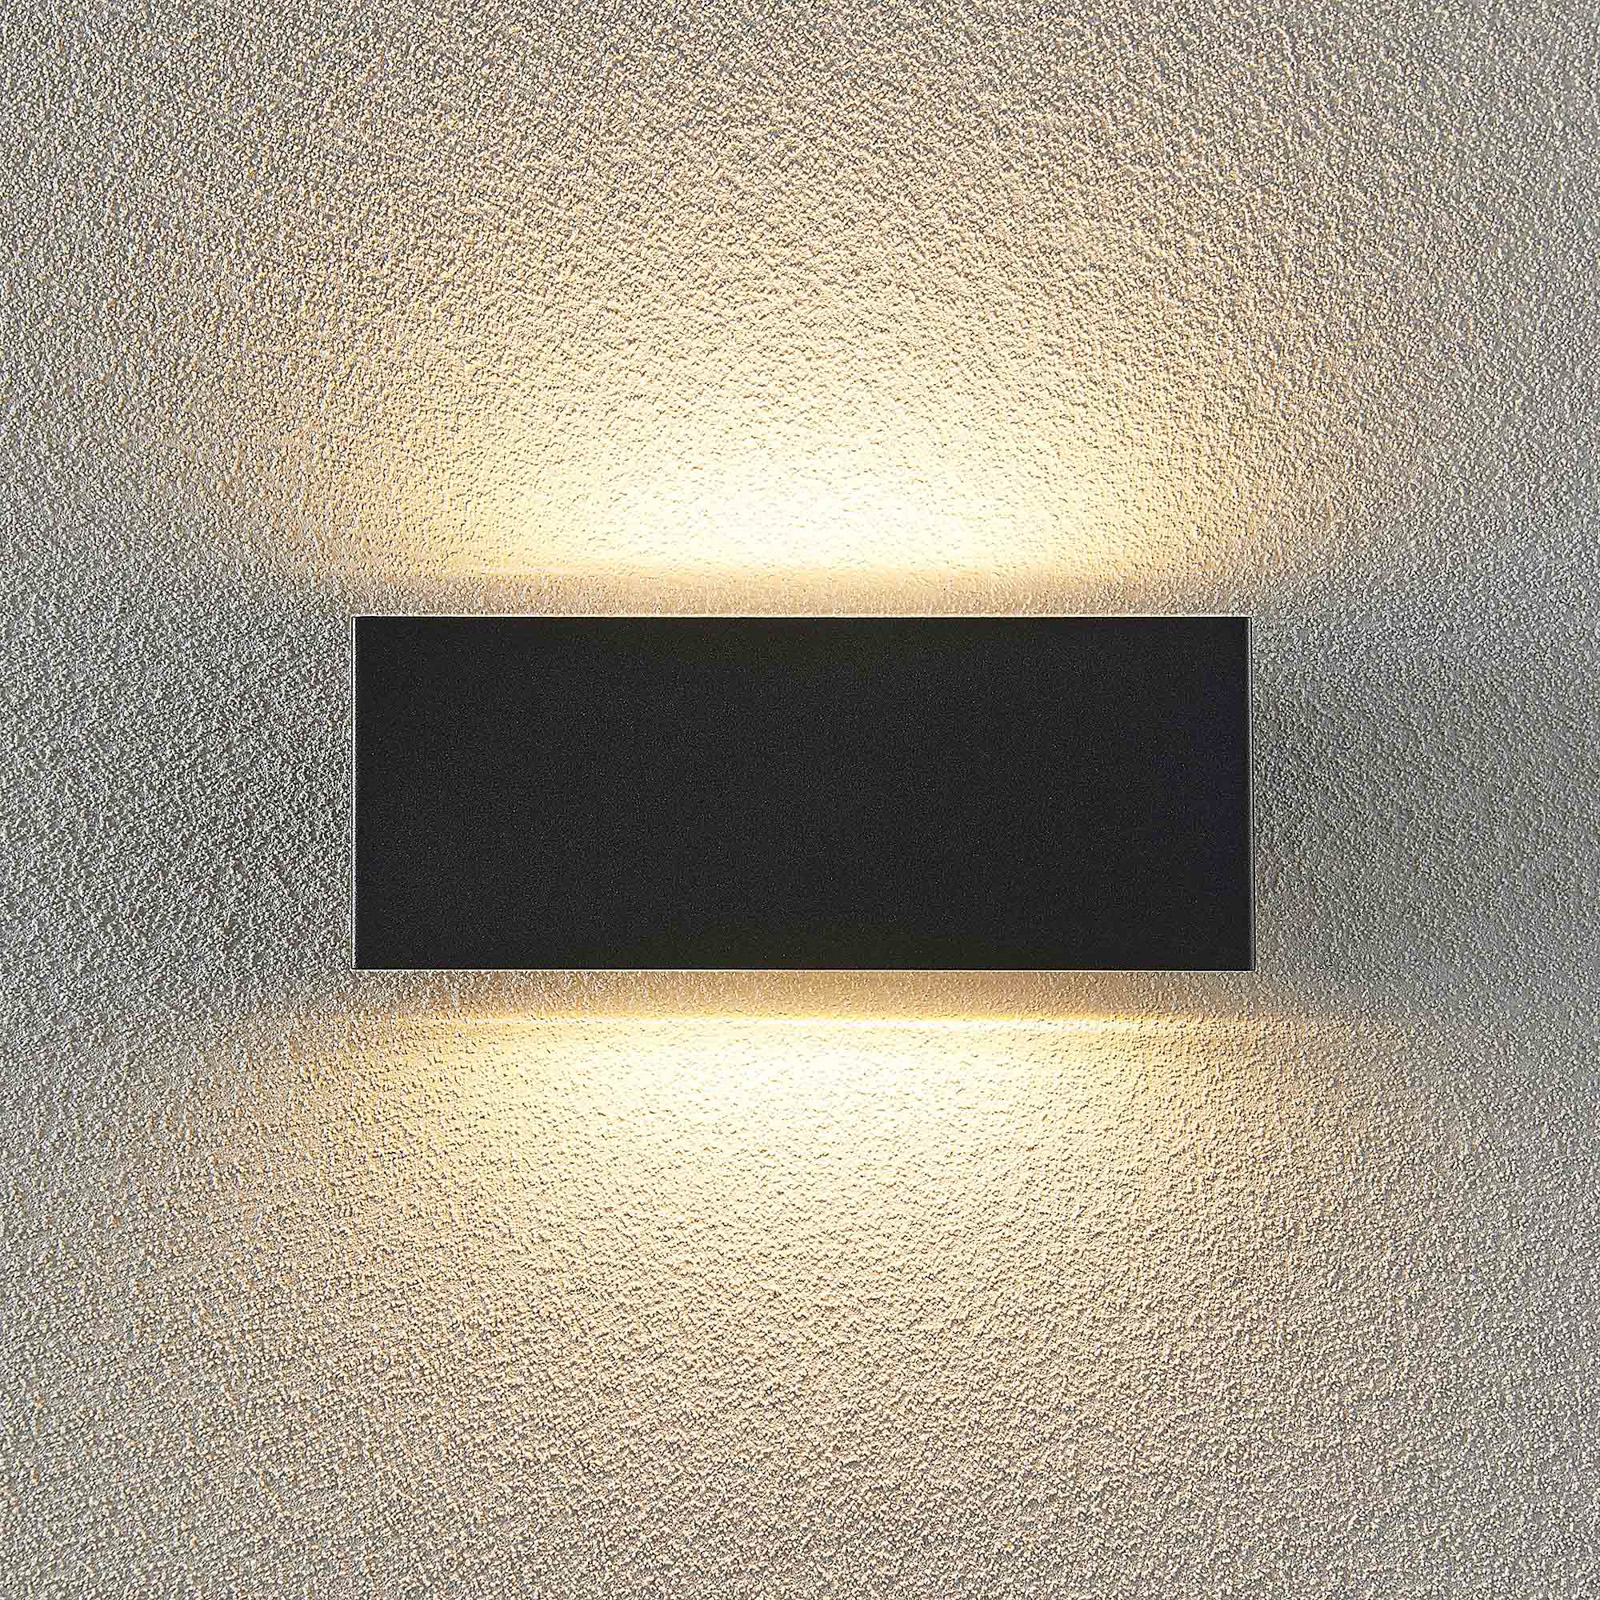 Lindby Kiban LED-Außenwandlampe in Dunkelgrau